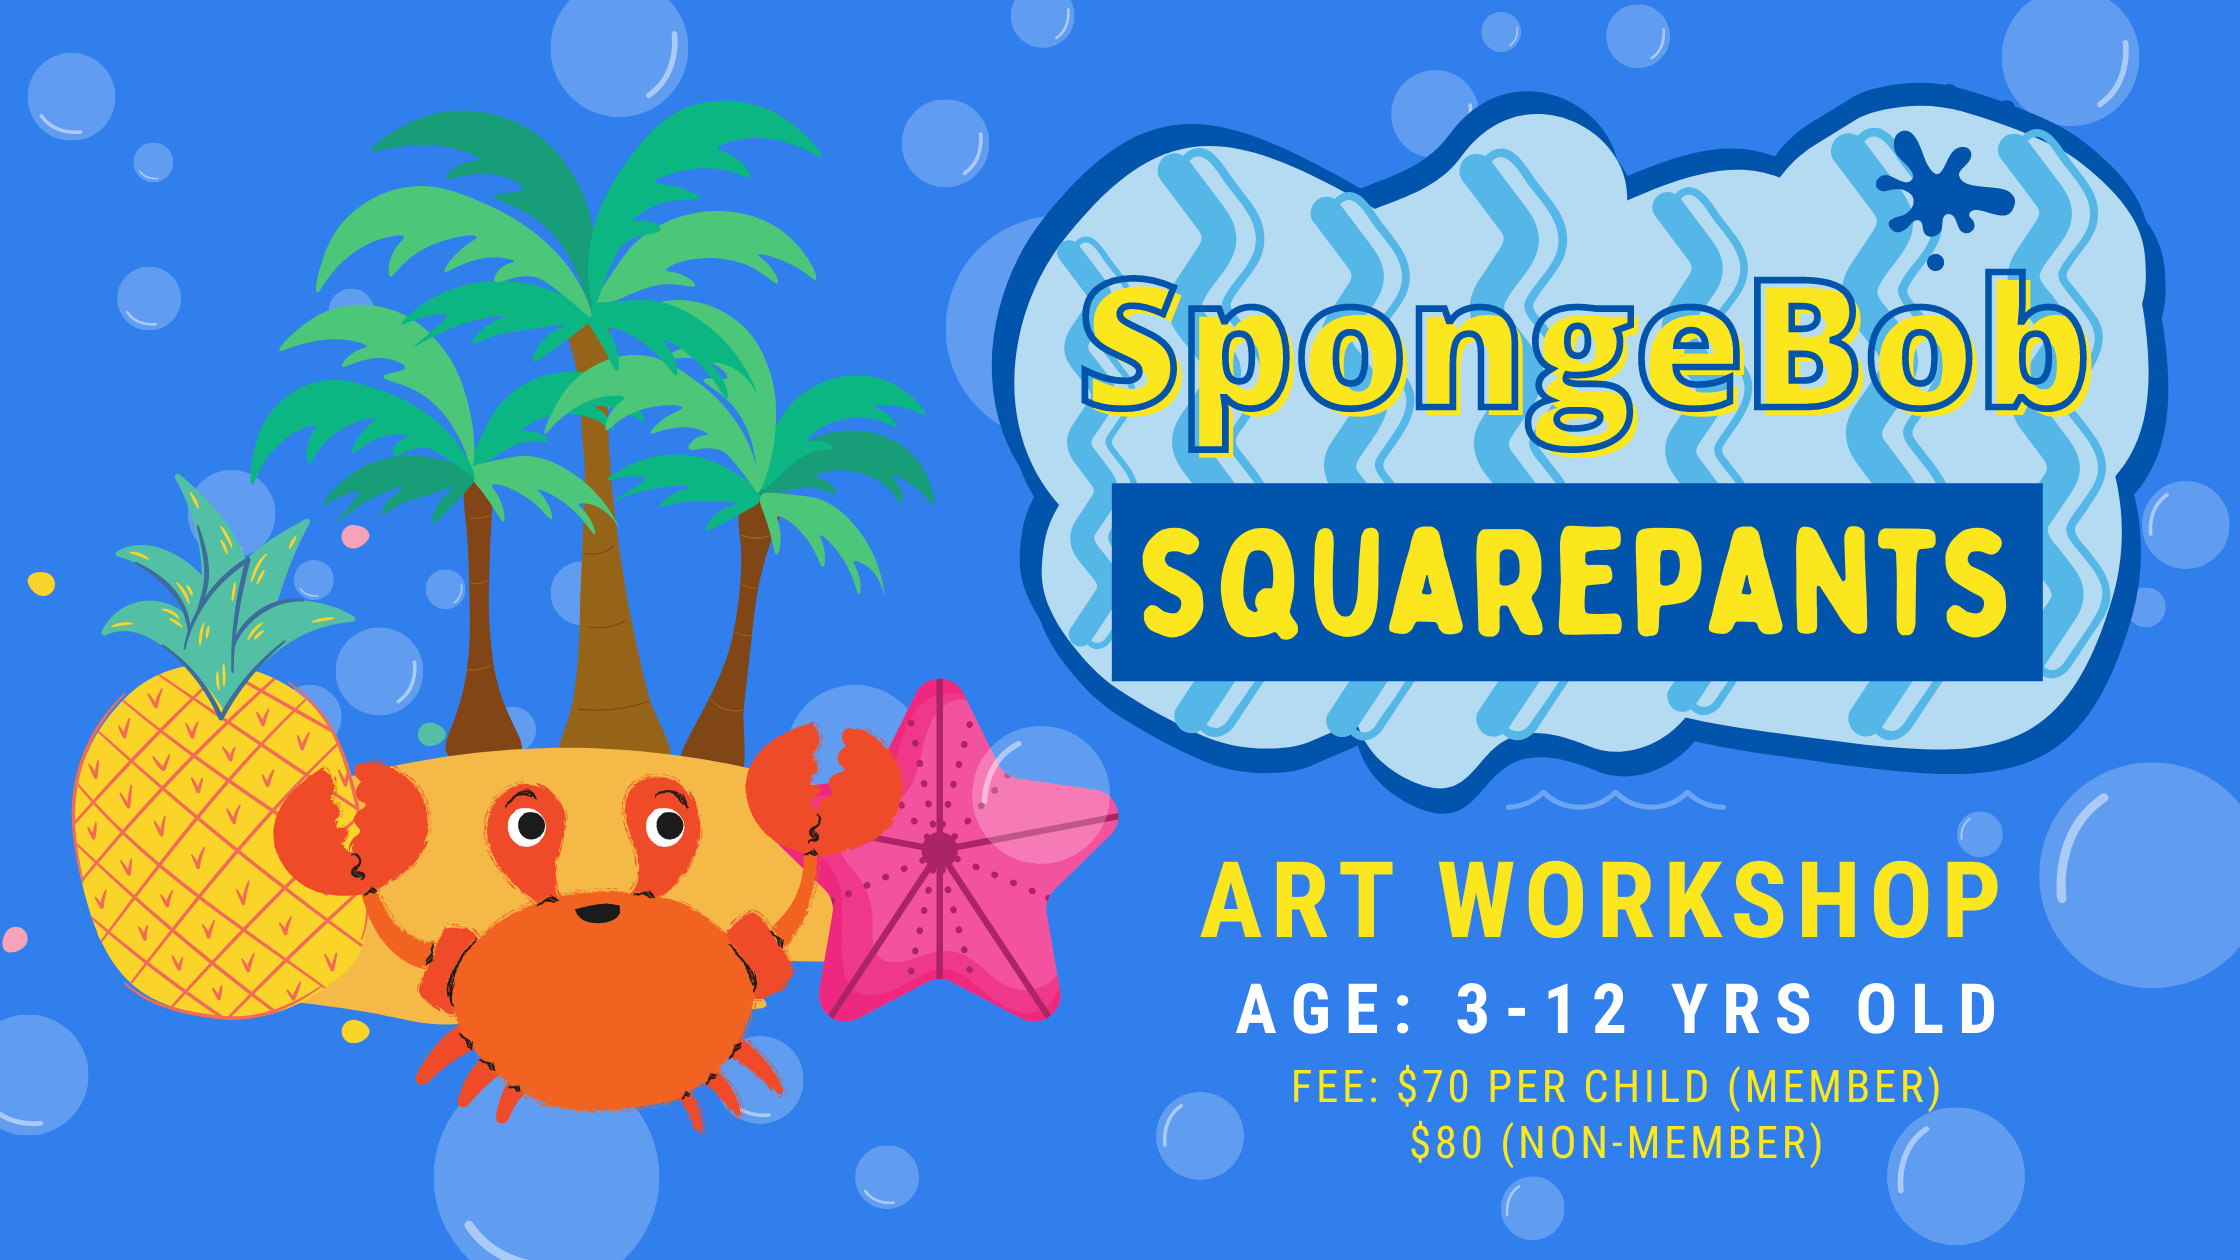 SpongeBob squarepants art camp